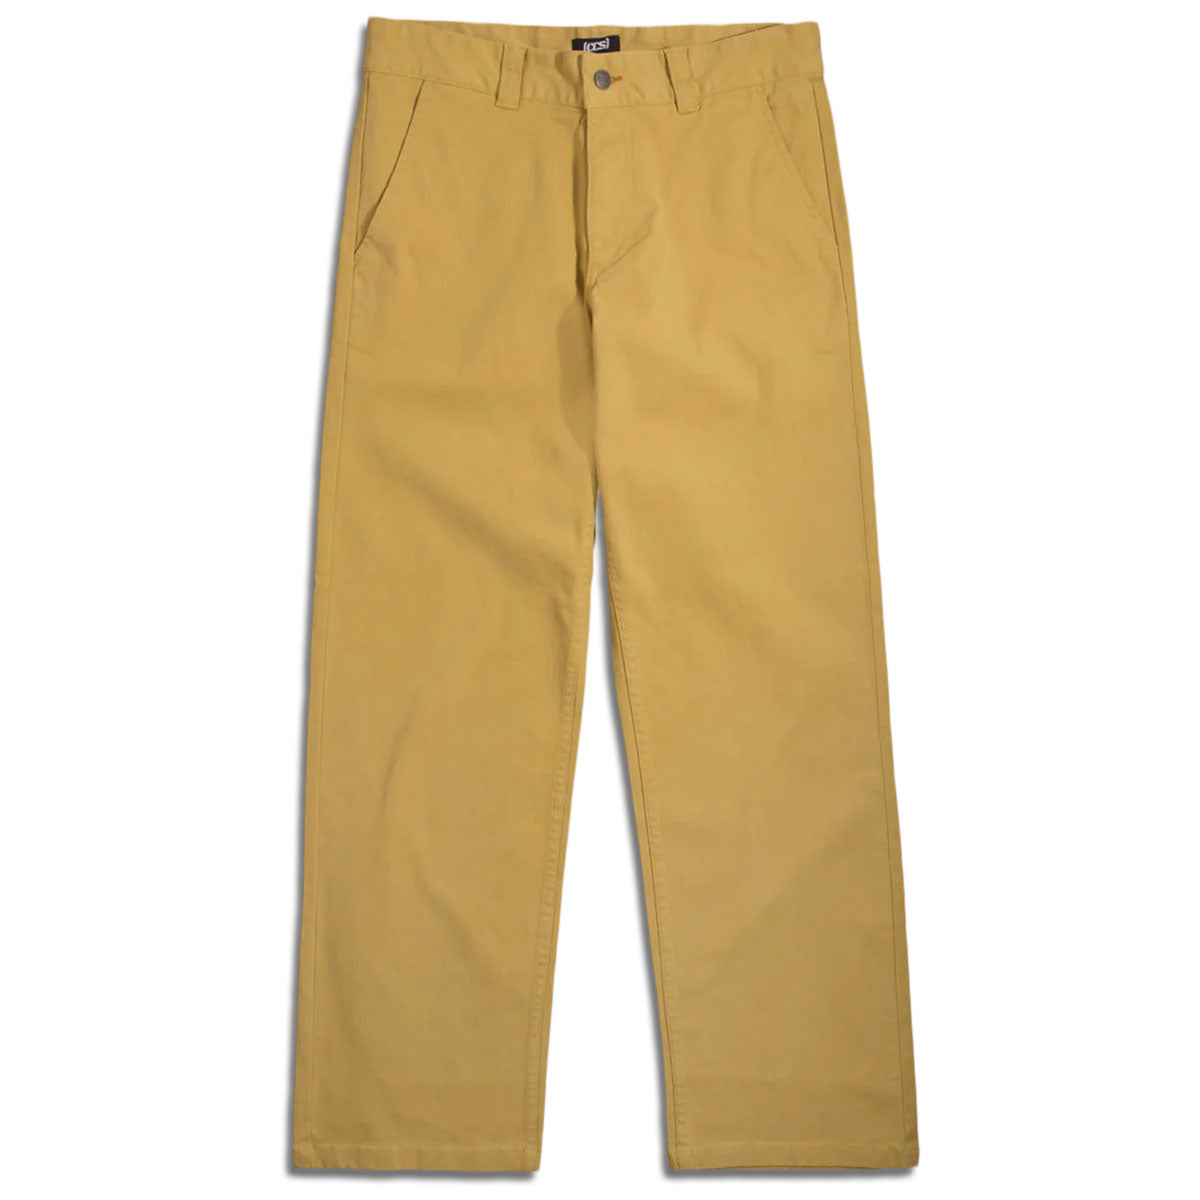 CCS Standard Plus Relaxed Chino Pants - Dark Mustard image 5